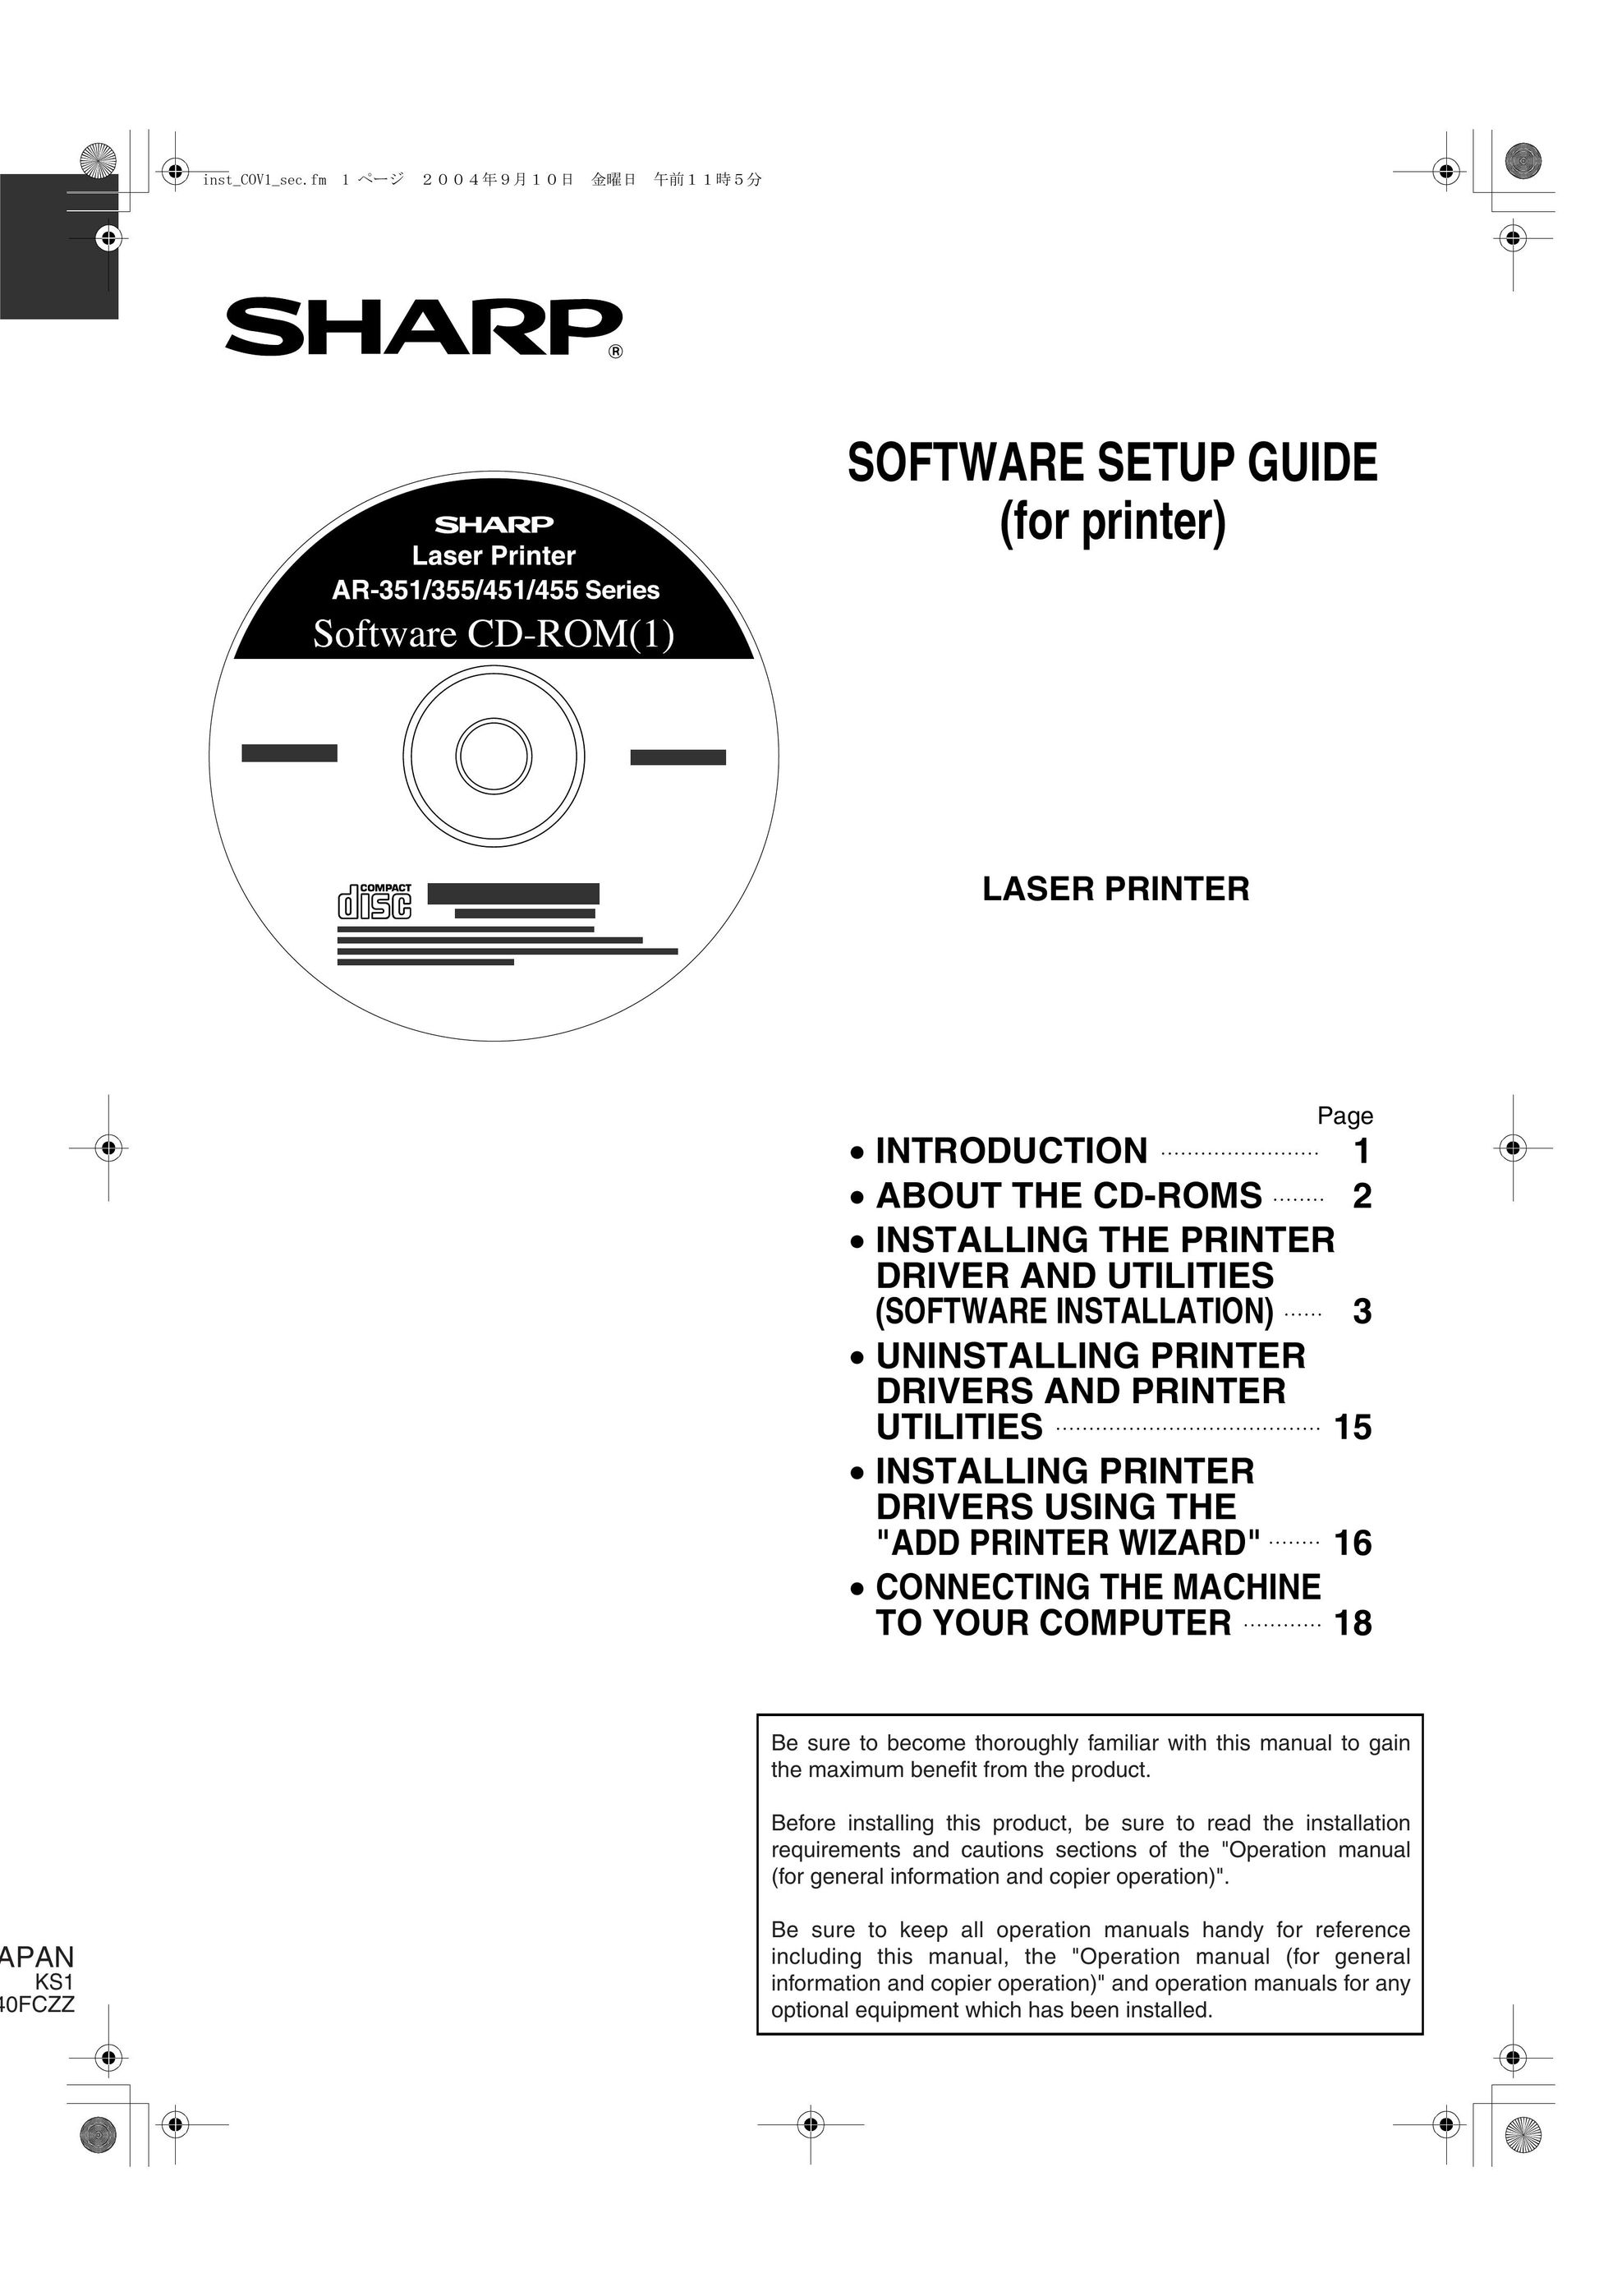 Sharp AR-451 Printer User Manual